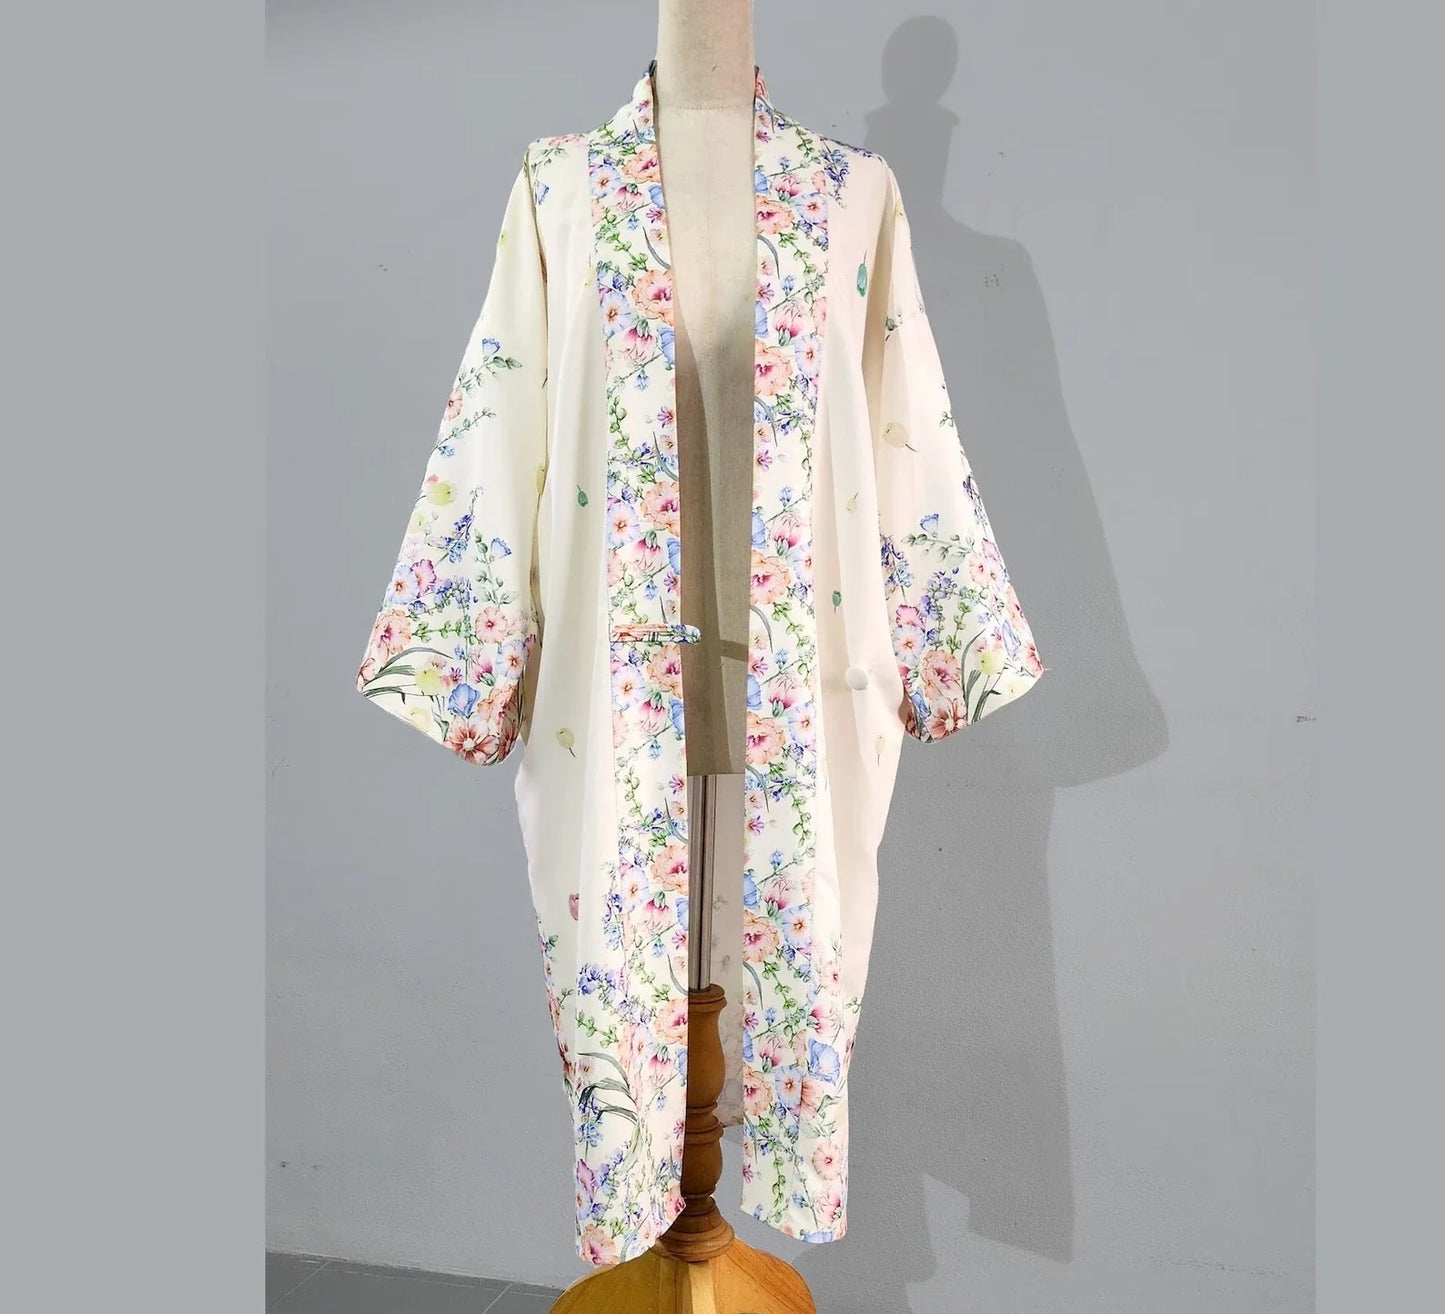 Cream floral oriental 1920s kimono robe with button closure, 1920s-inspired loungewear